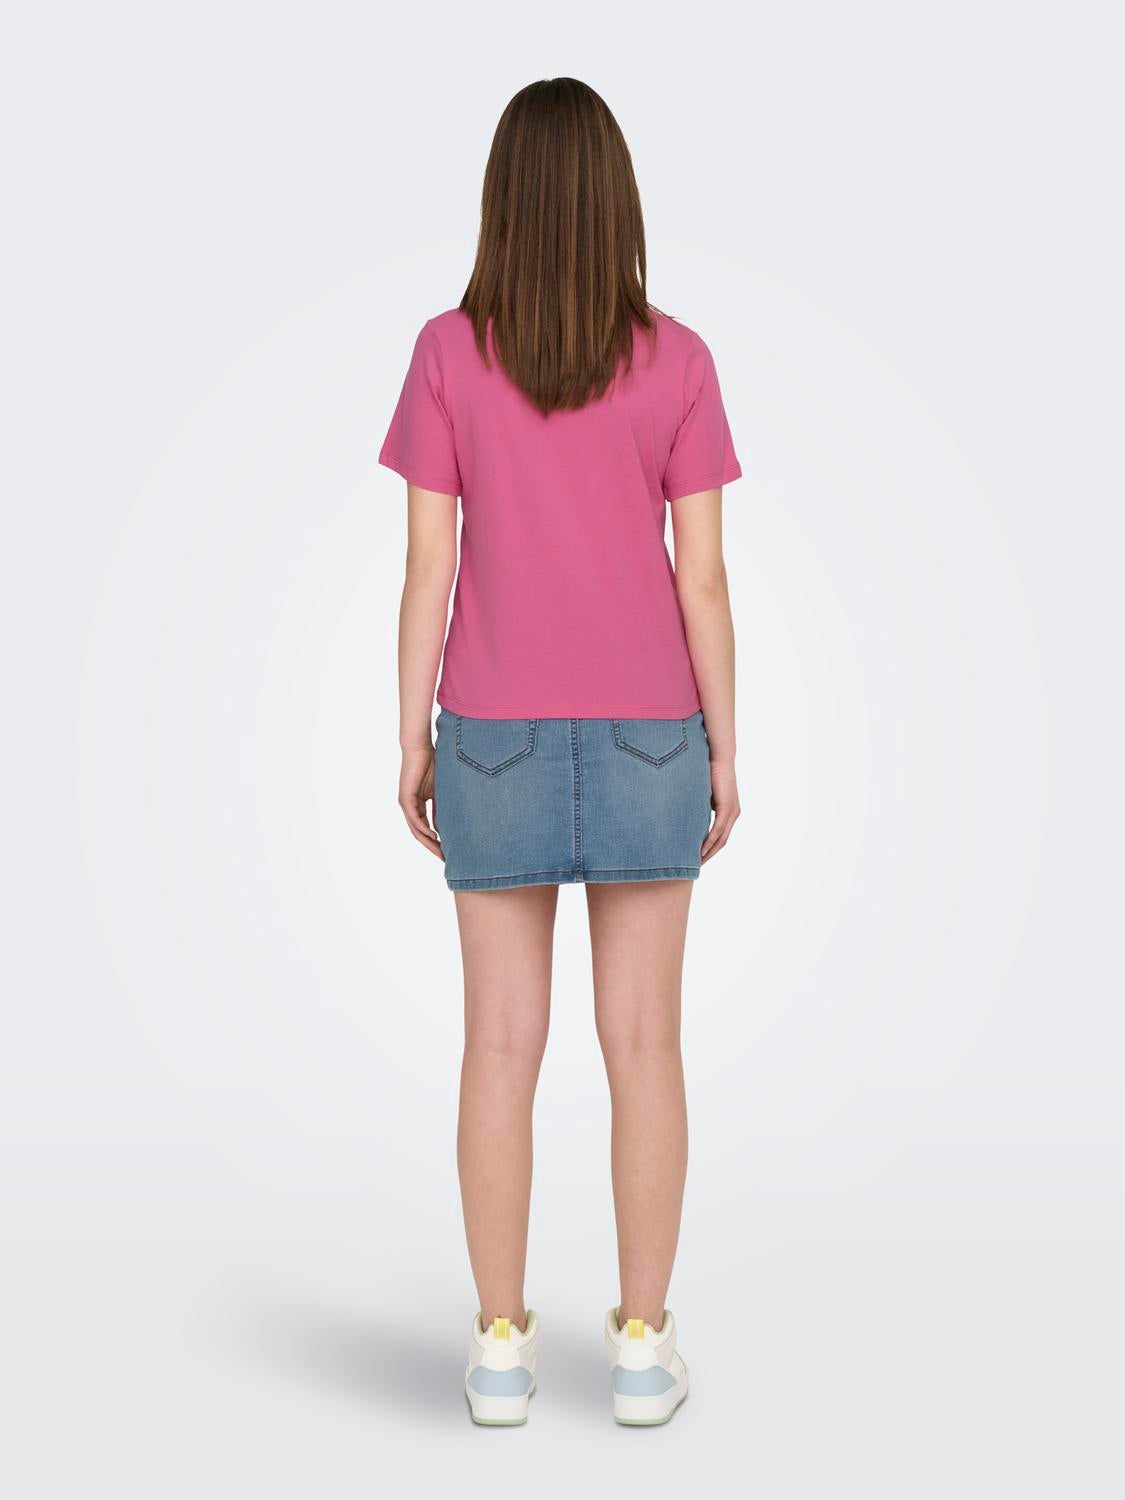 Buy Muhoort® Men Light Pink Round Neck Half Sleeve T-Shirt, Plain